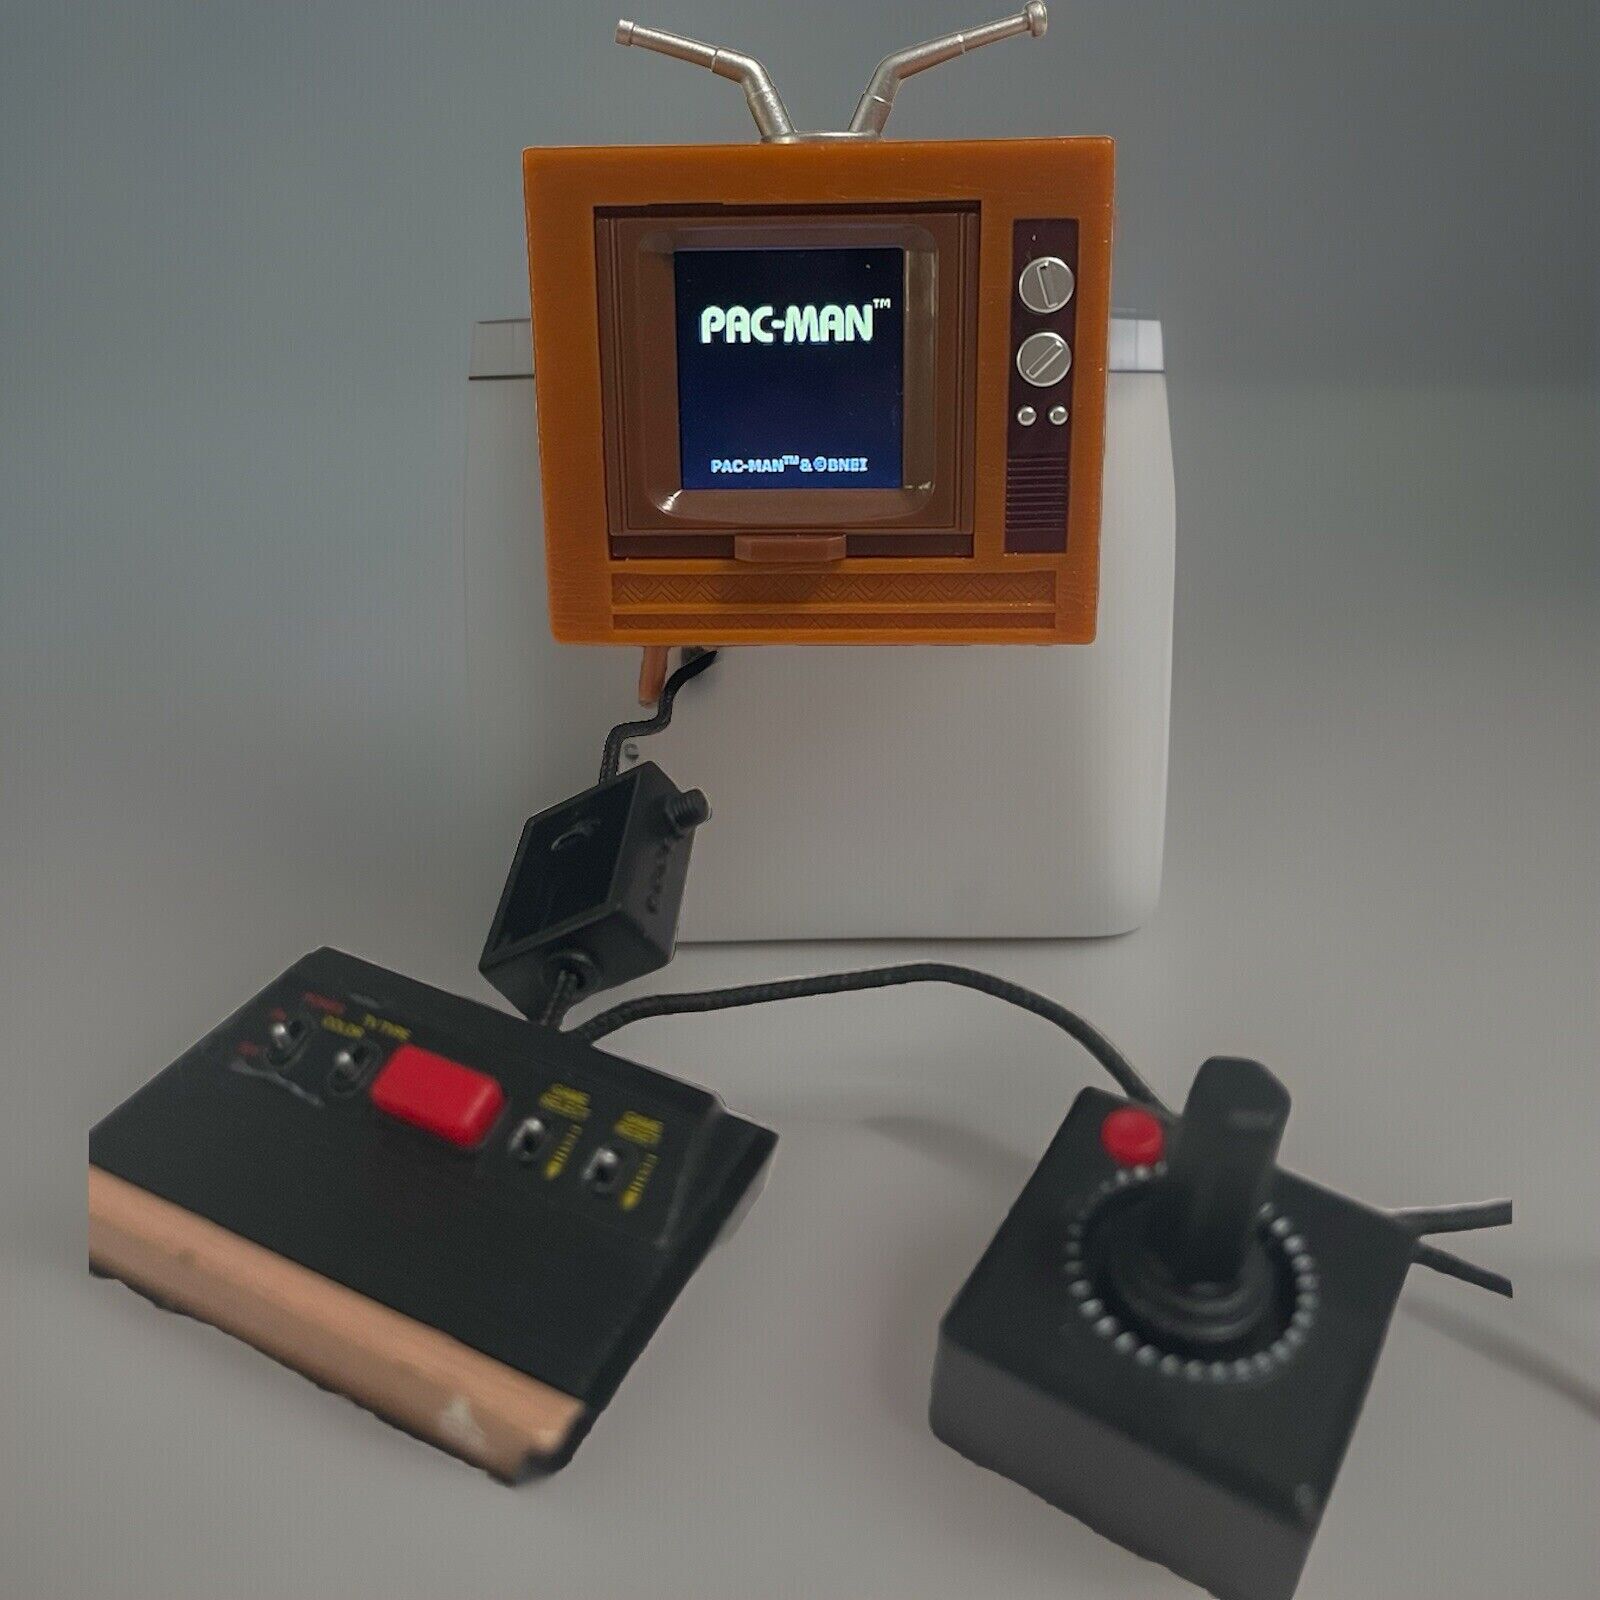 Atari Legacy Edition Arcade Machine - Works Great